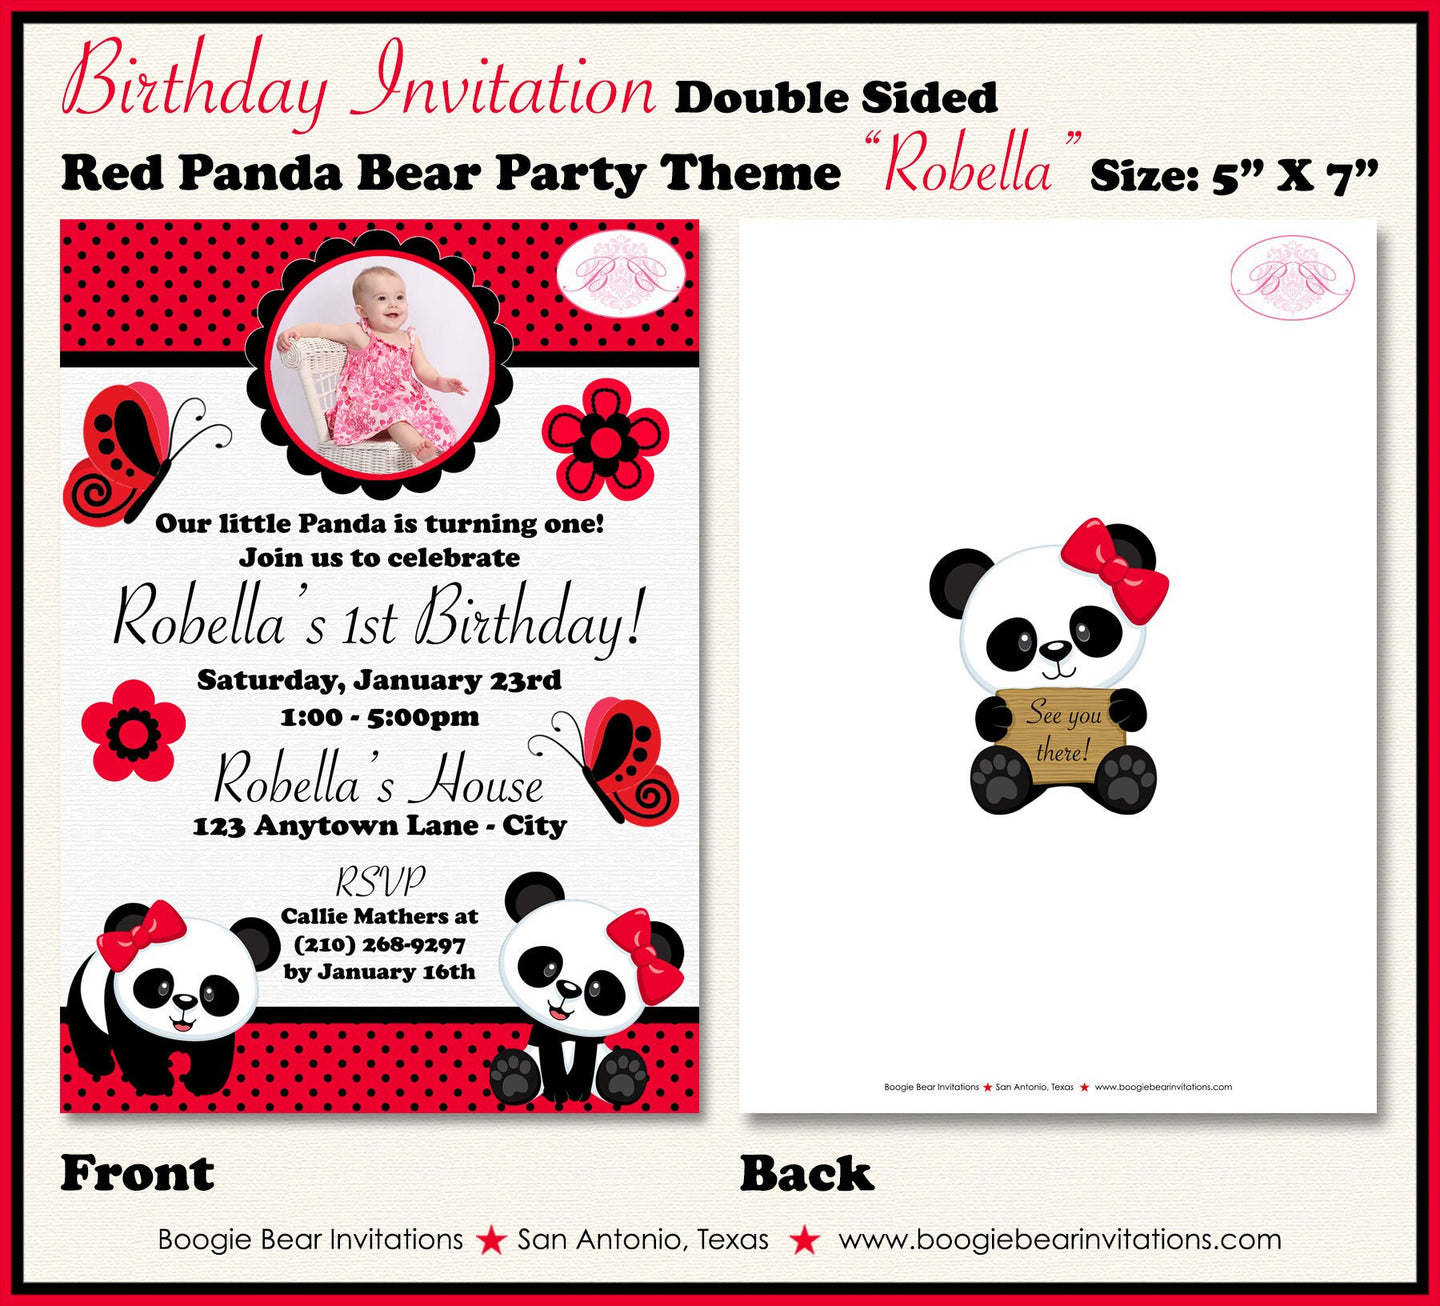 Red Panda Bear Birthday Party Invitation Photo Girl Little Black Wild Zoo Boogie Bear Invitations Robella Theme Paperless Printable Printed